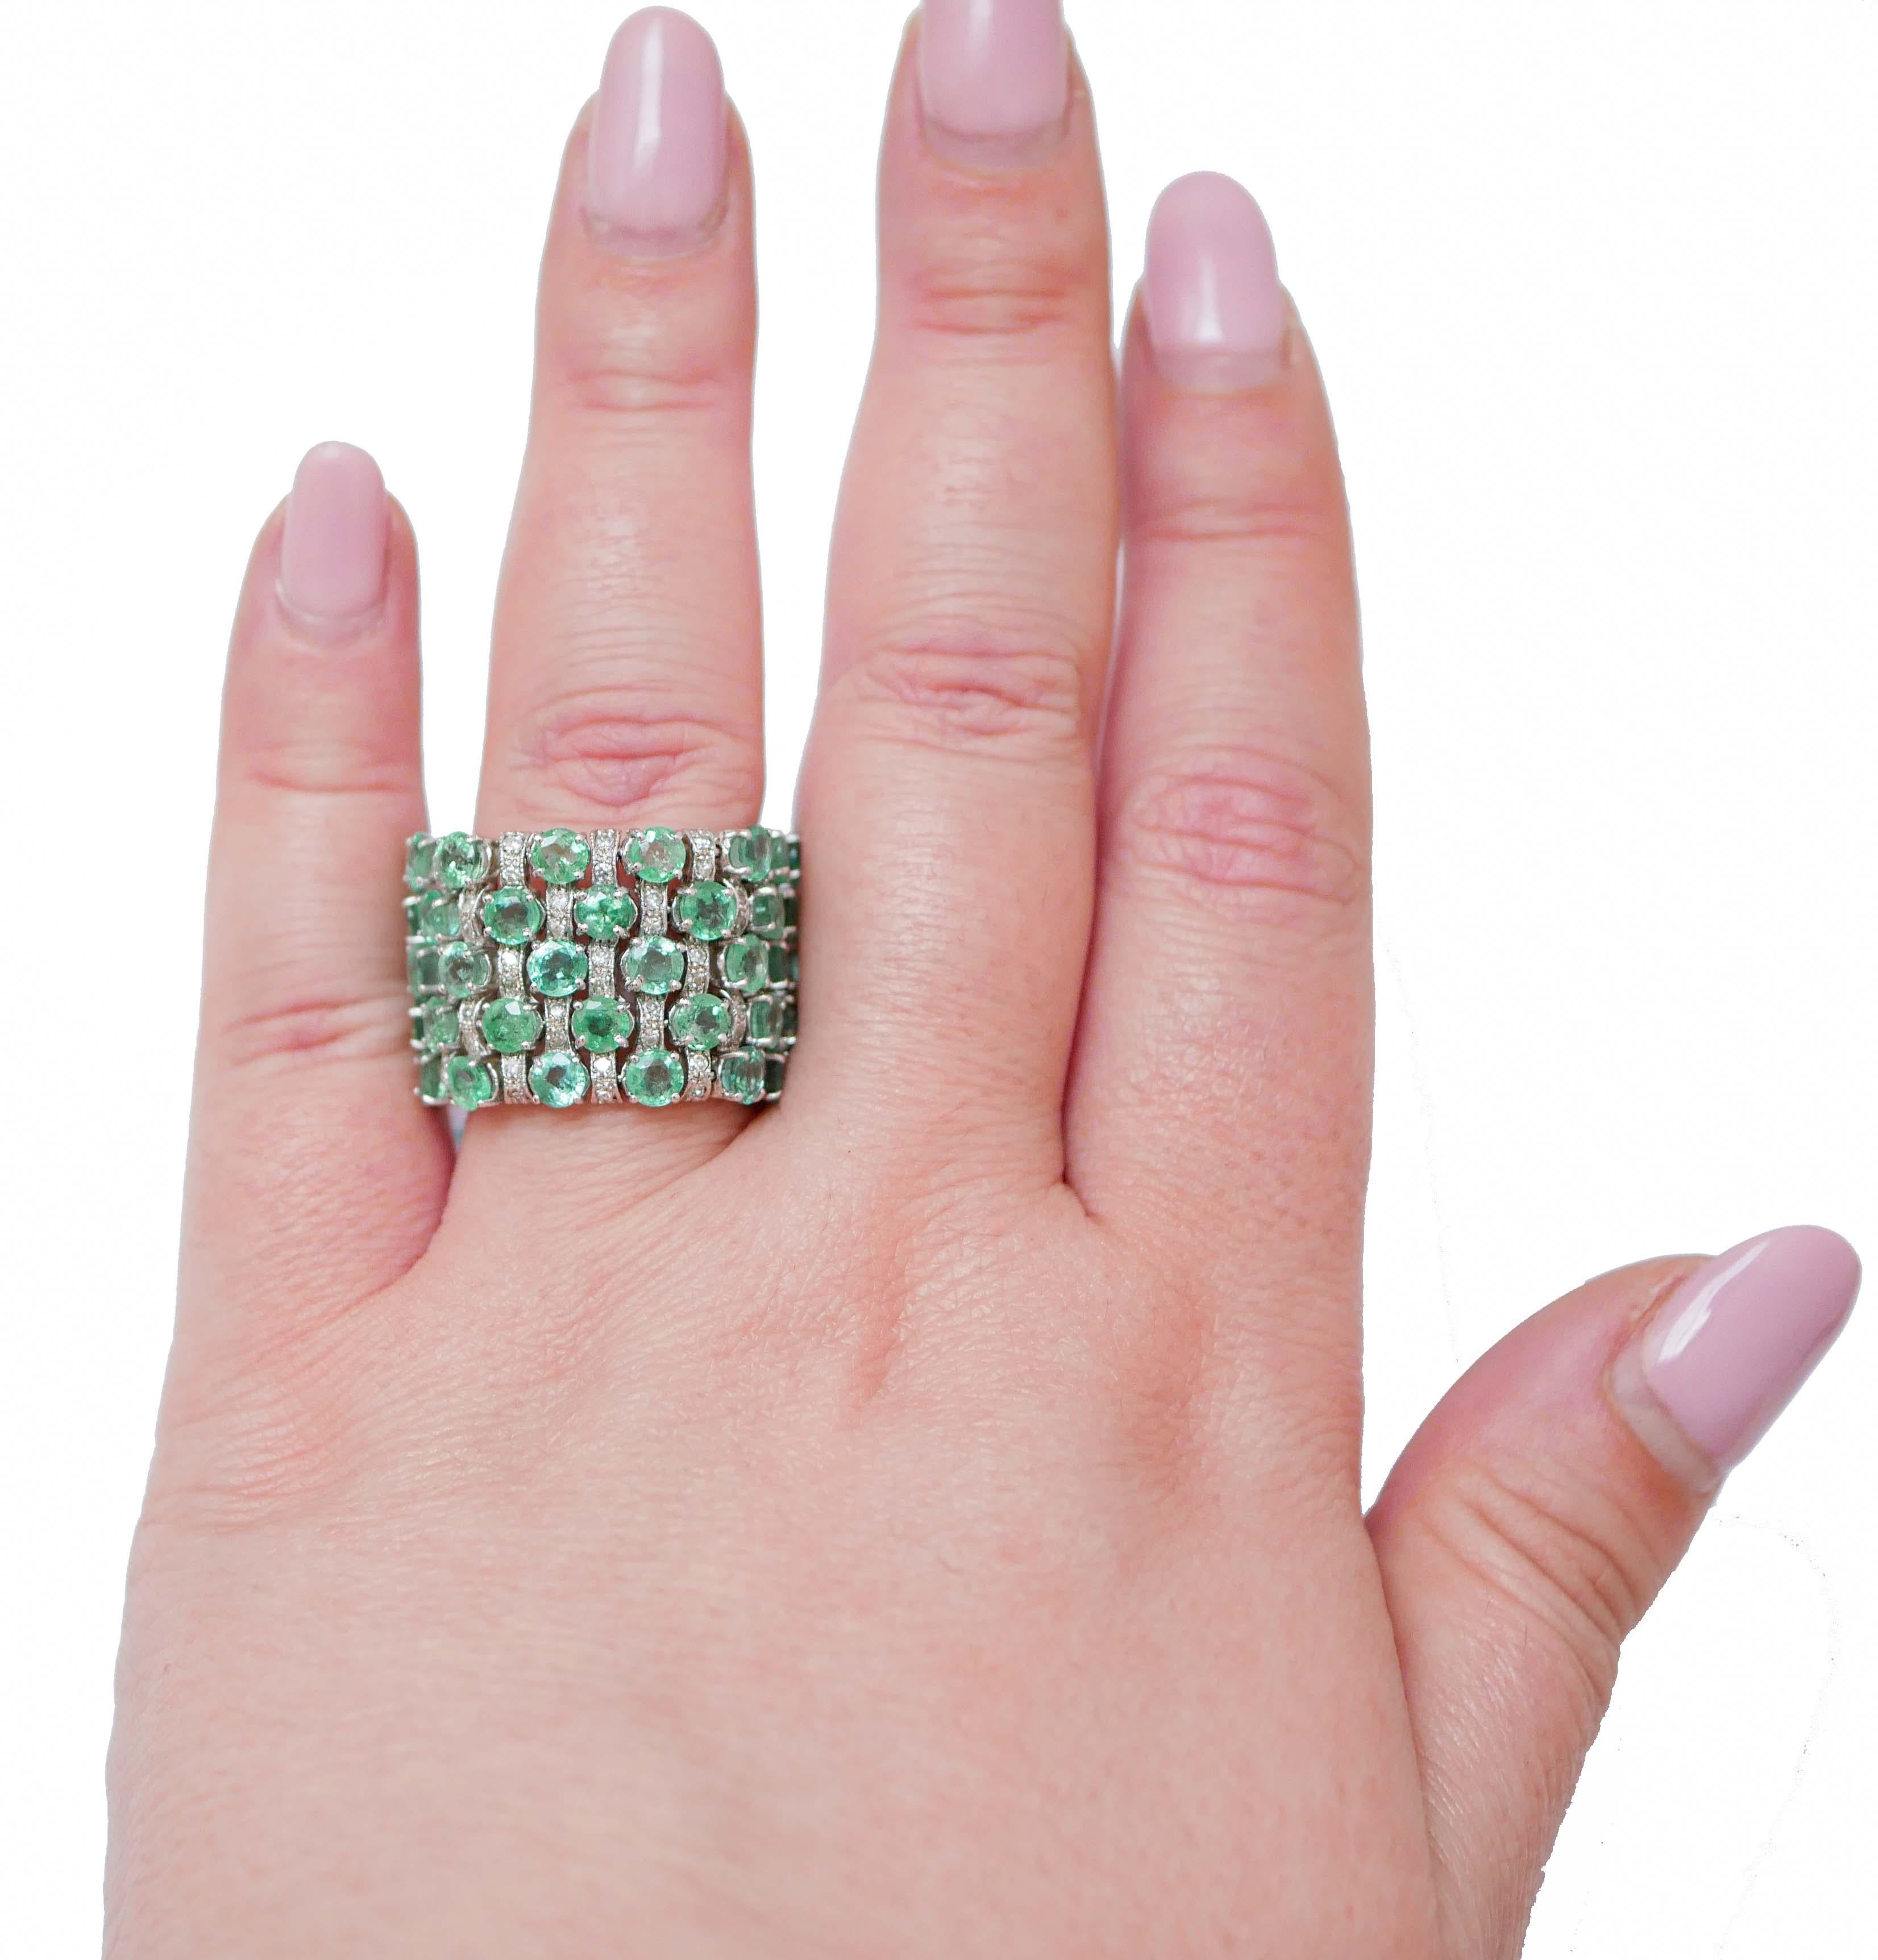 Mixed Cut Emeralds, Diamonds, 14 Karat White Gold Band Ring. For Sale